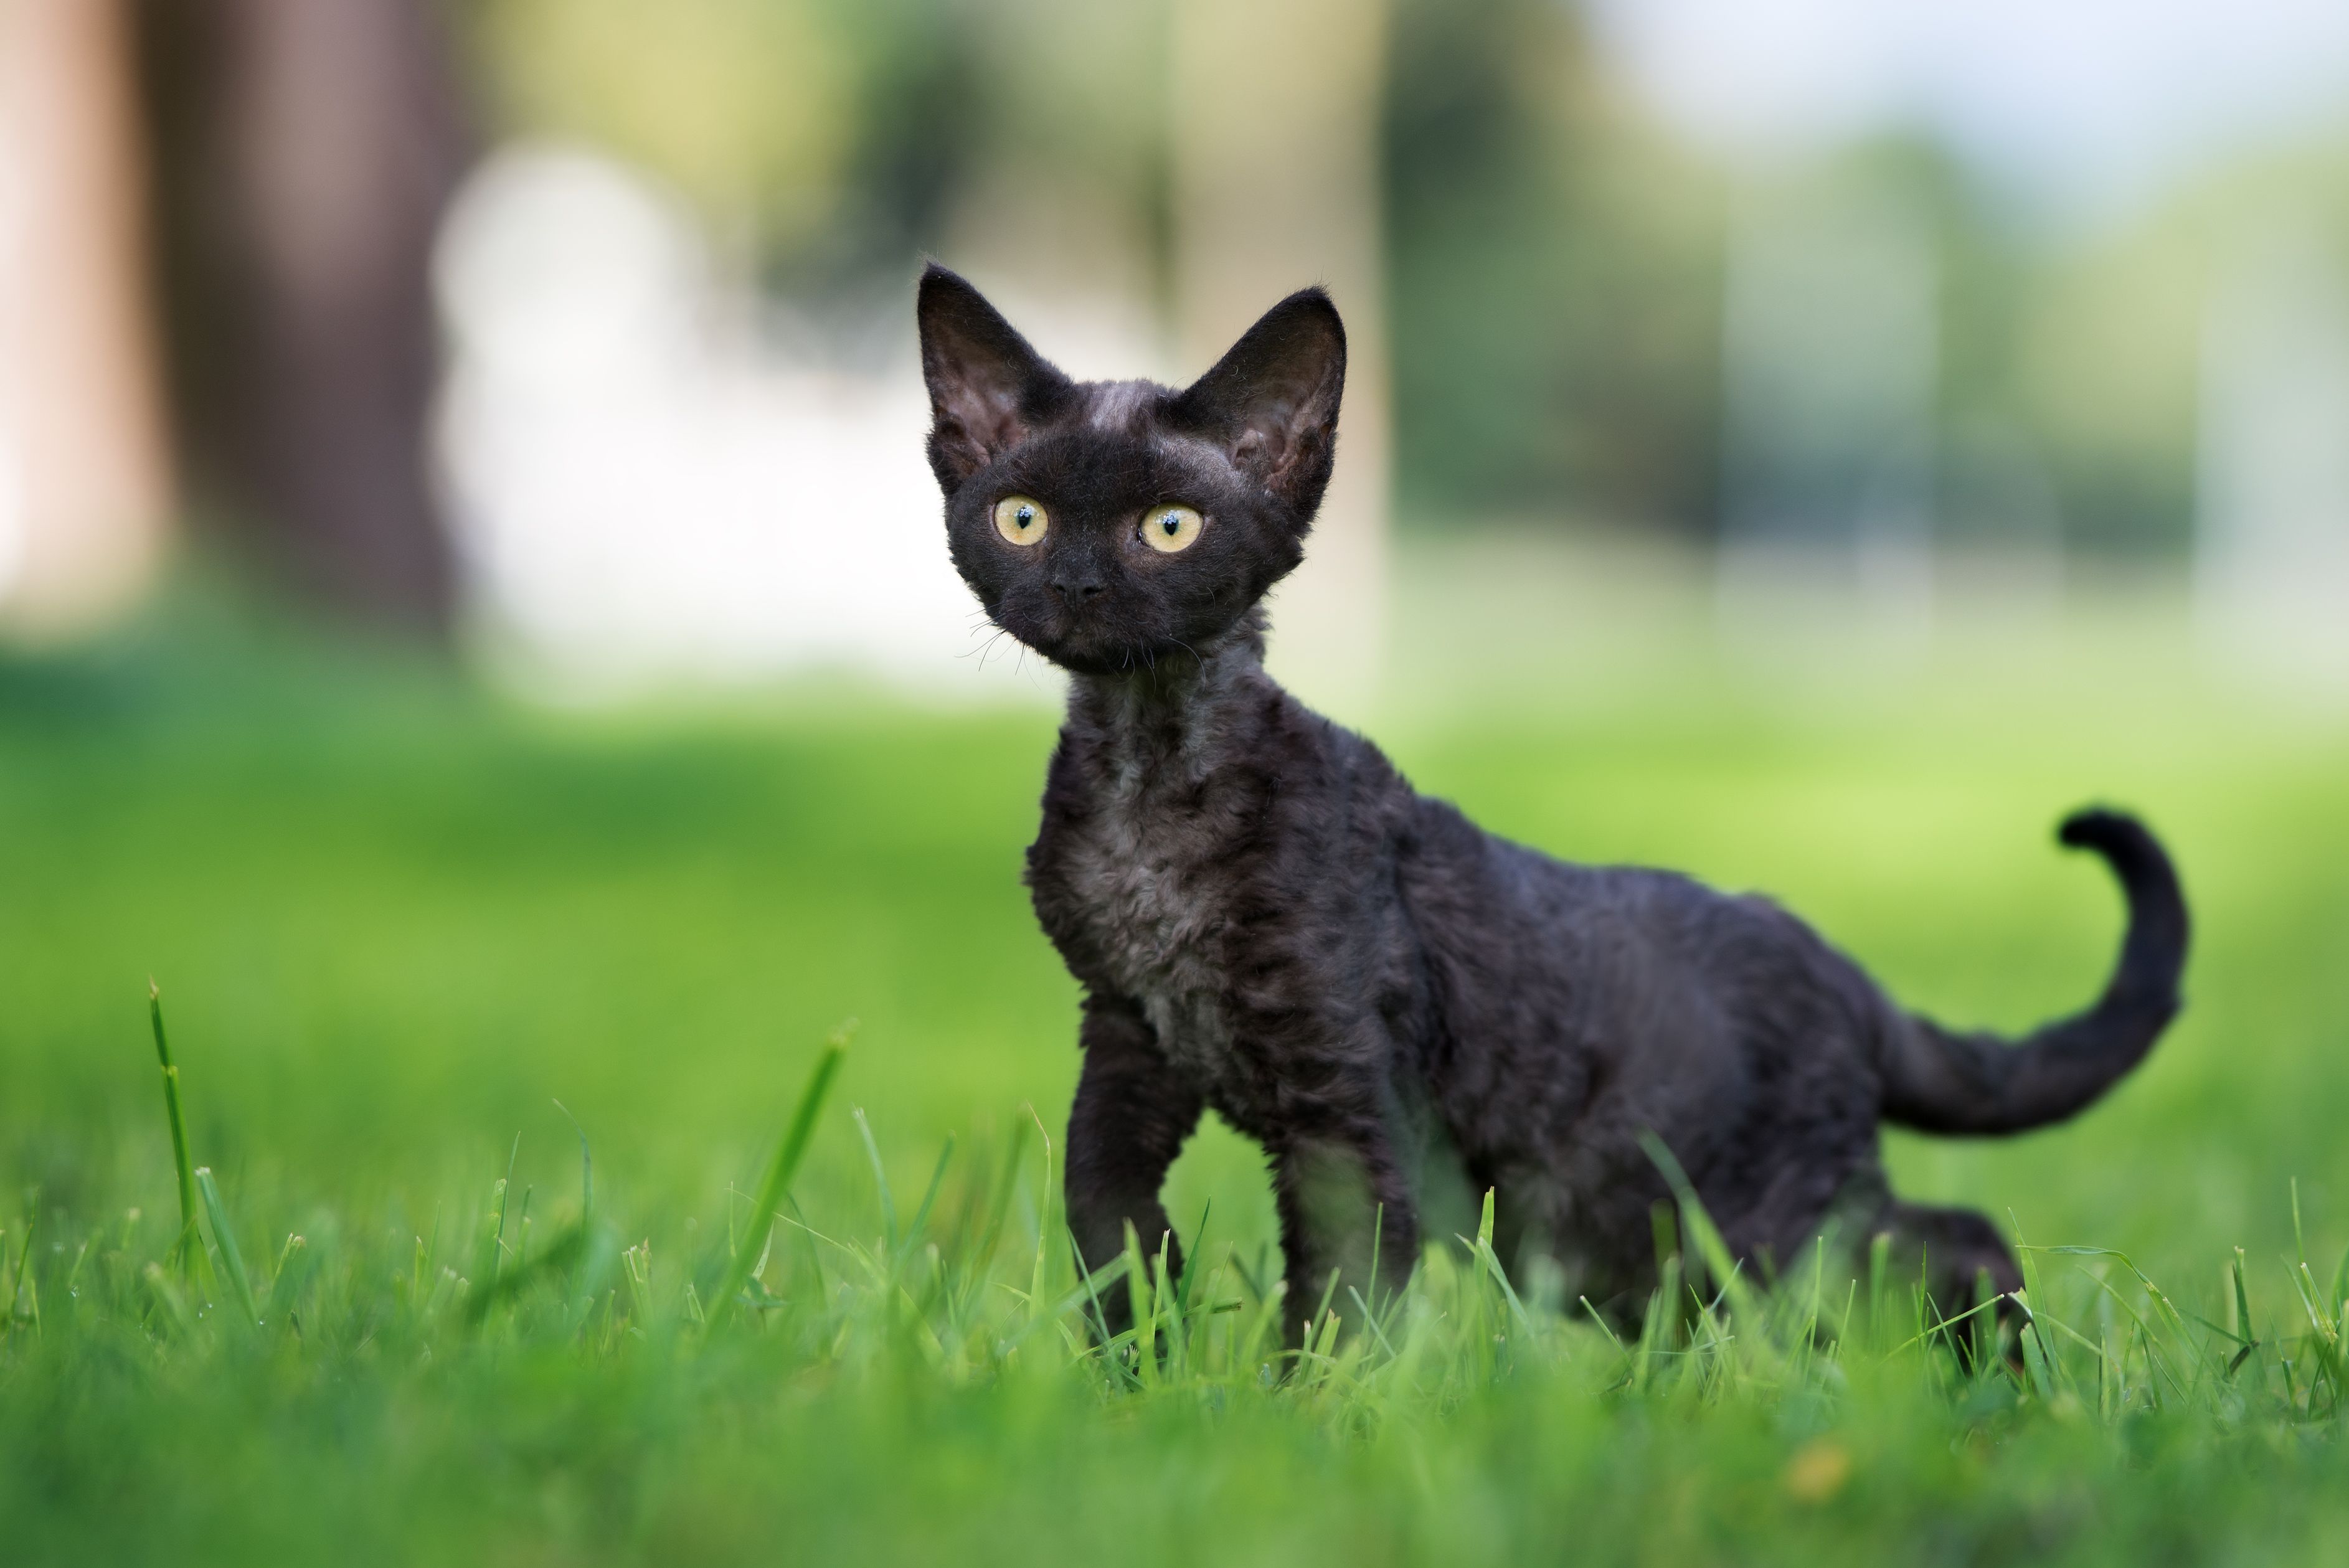 short haired black cat breeds